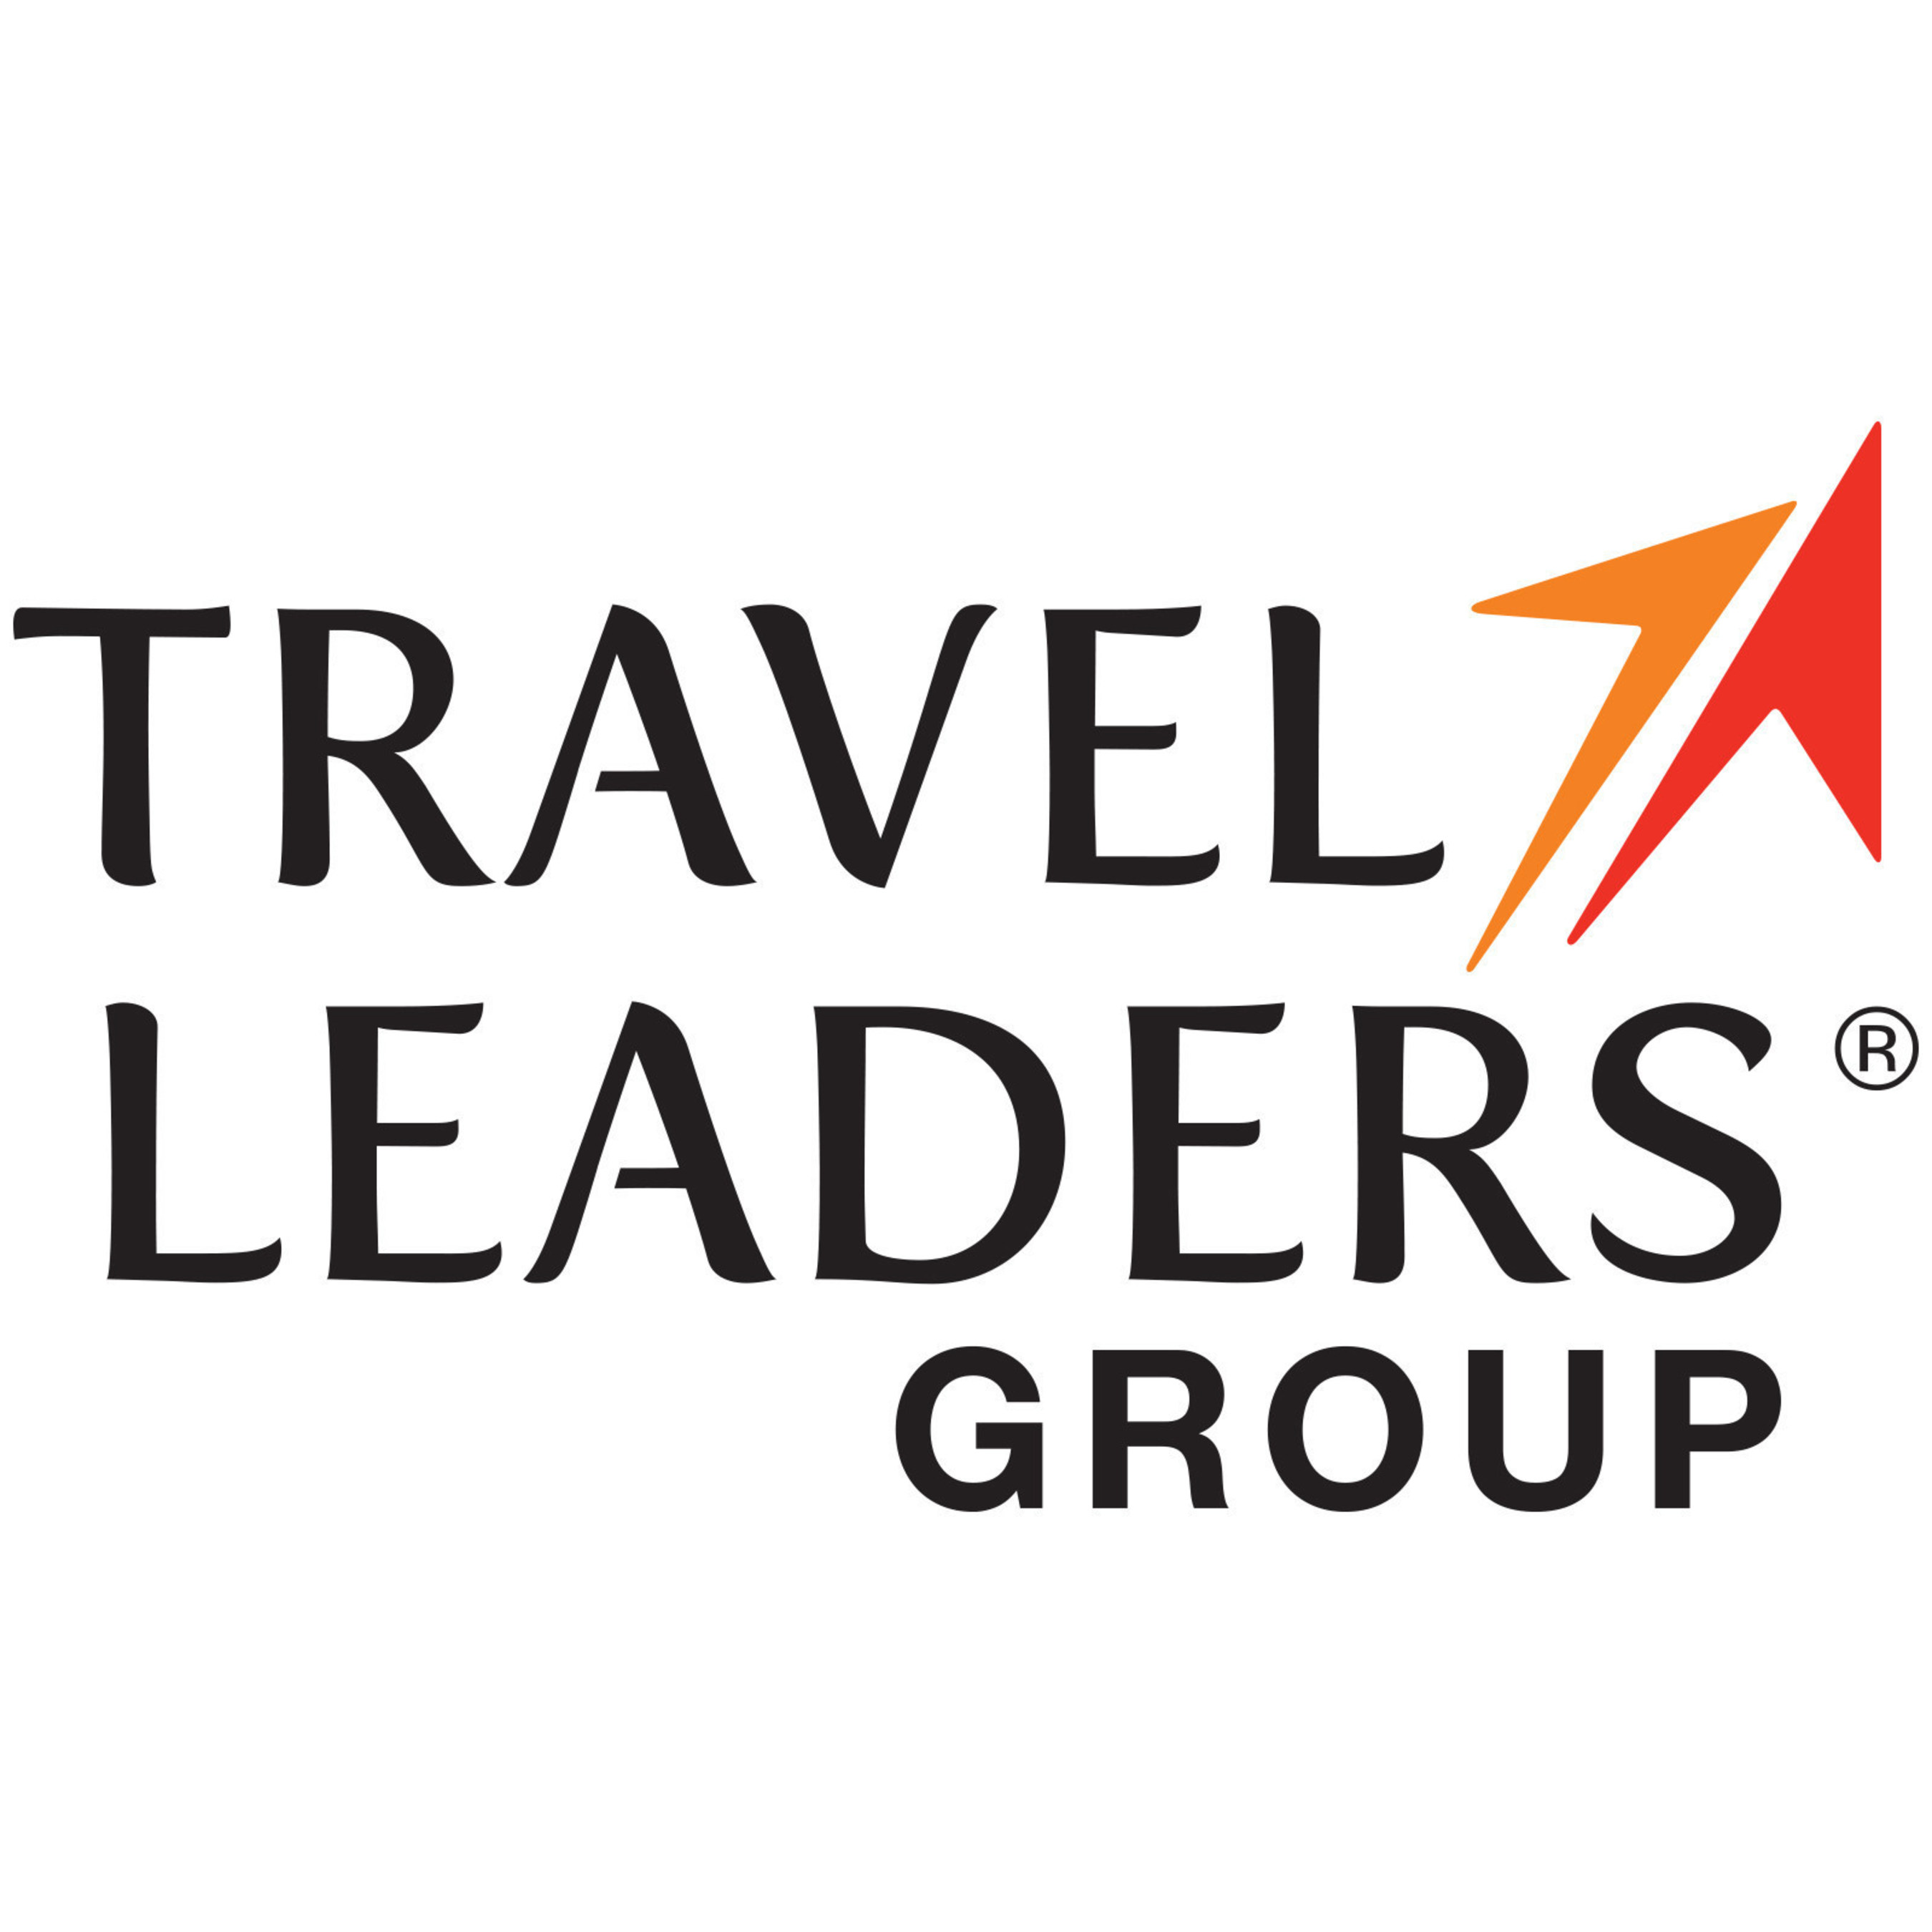 Travel Leaders Group Logo.